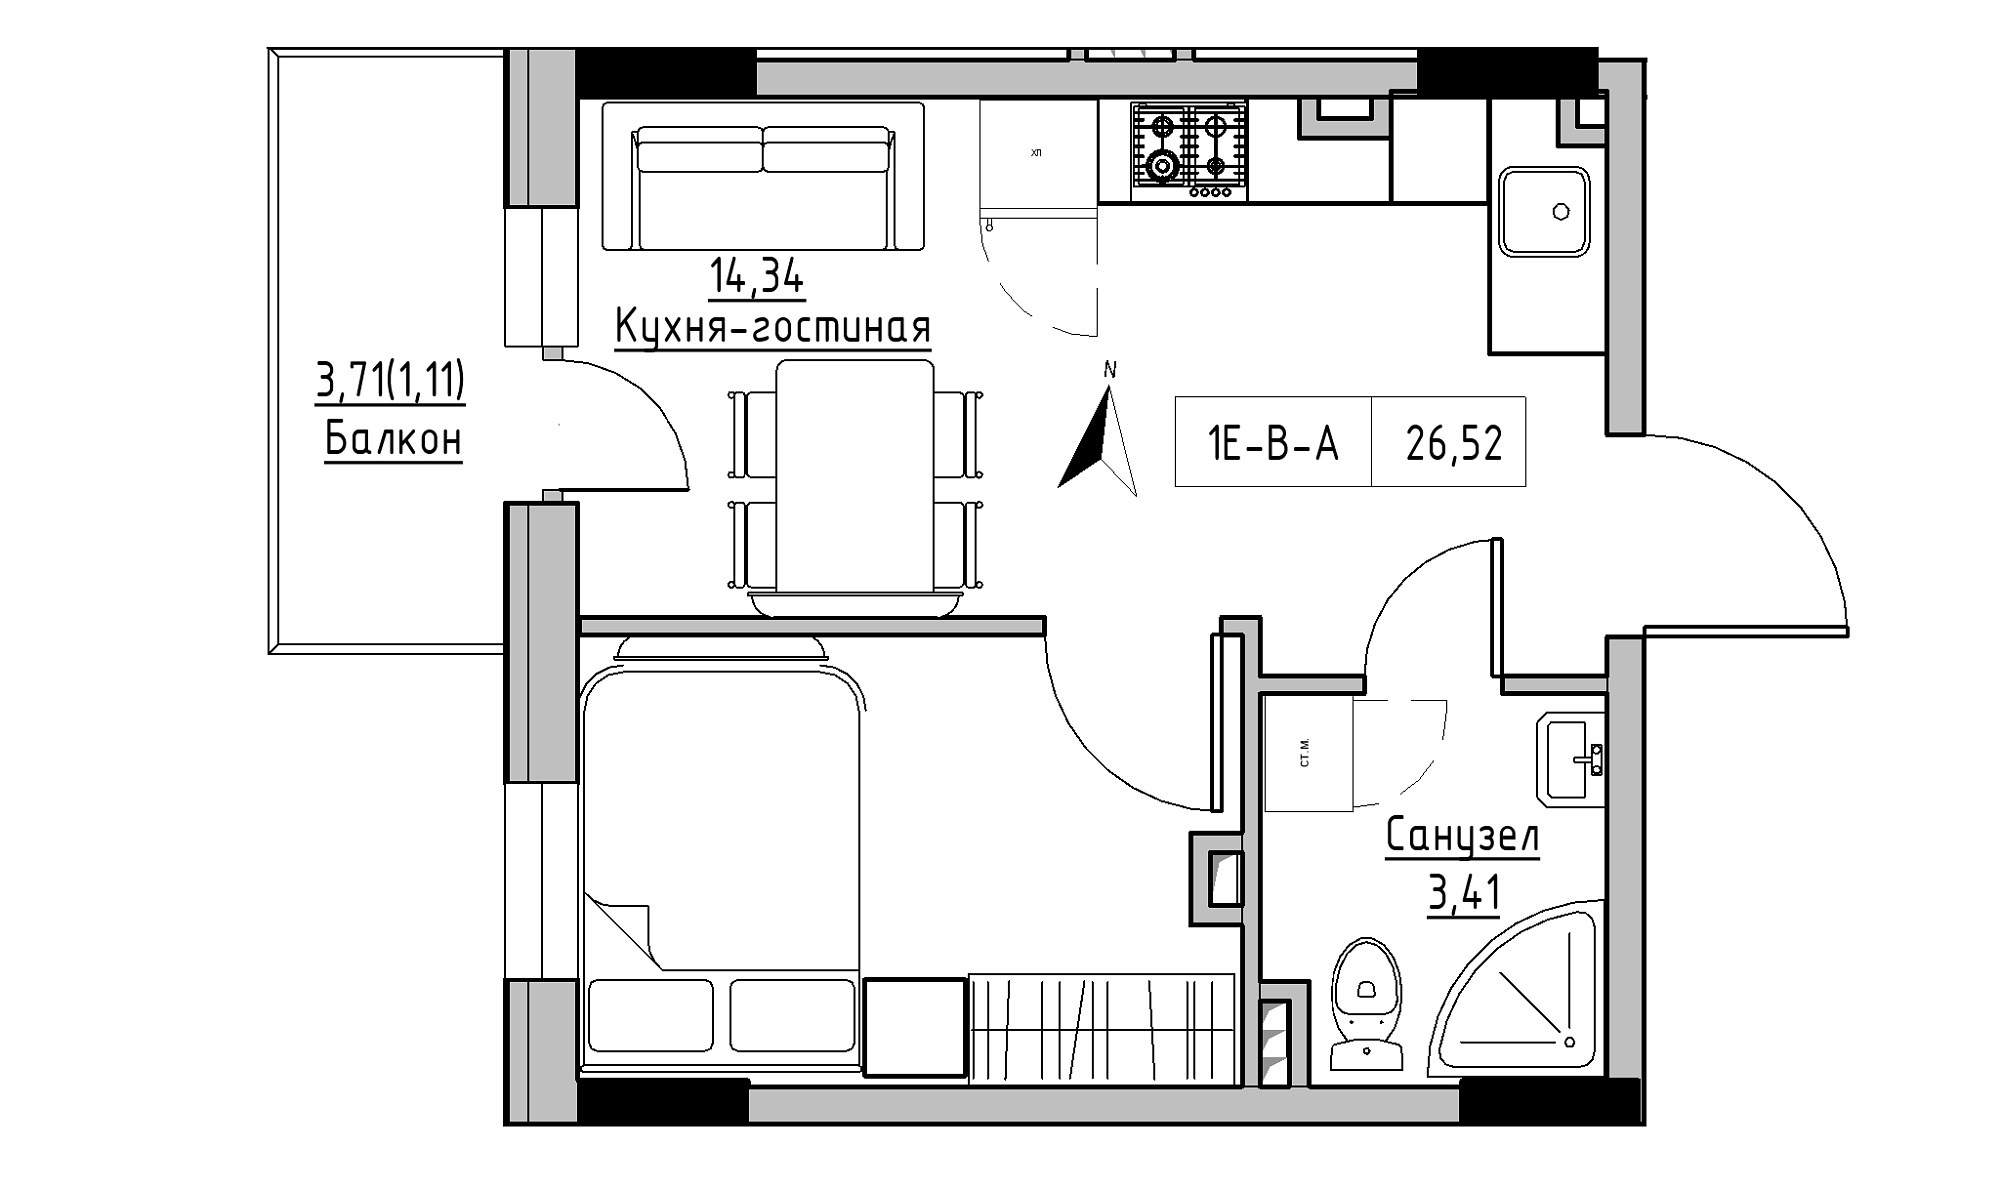 Planning 1-rm flats area 26.52m2, KS-025-02/0005.